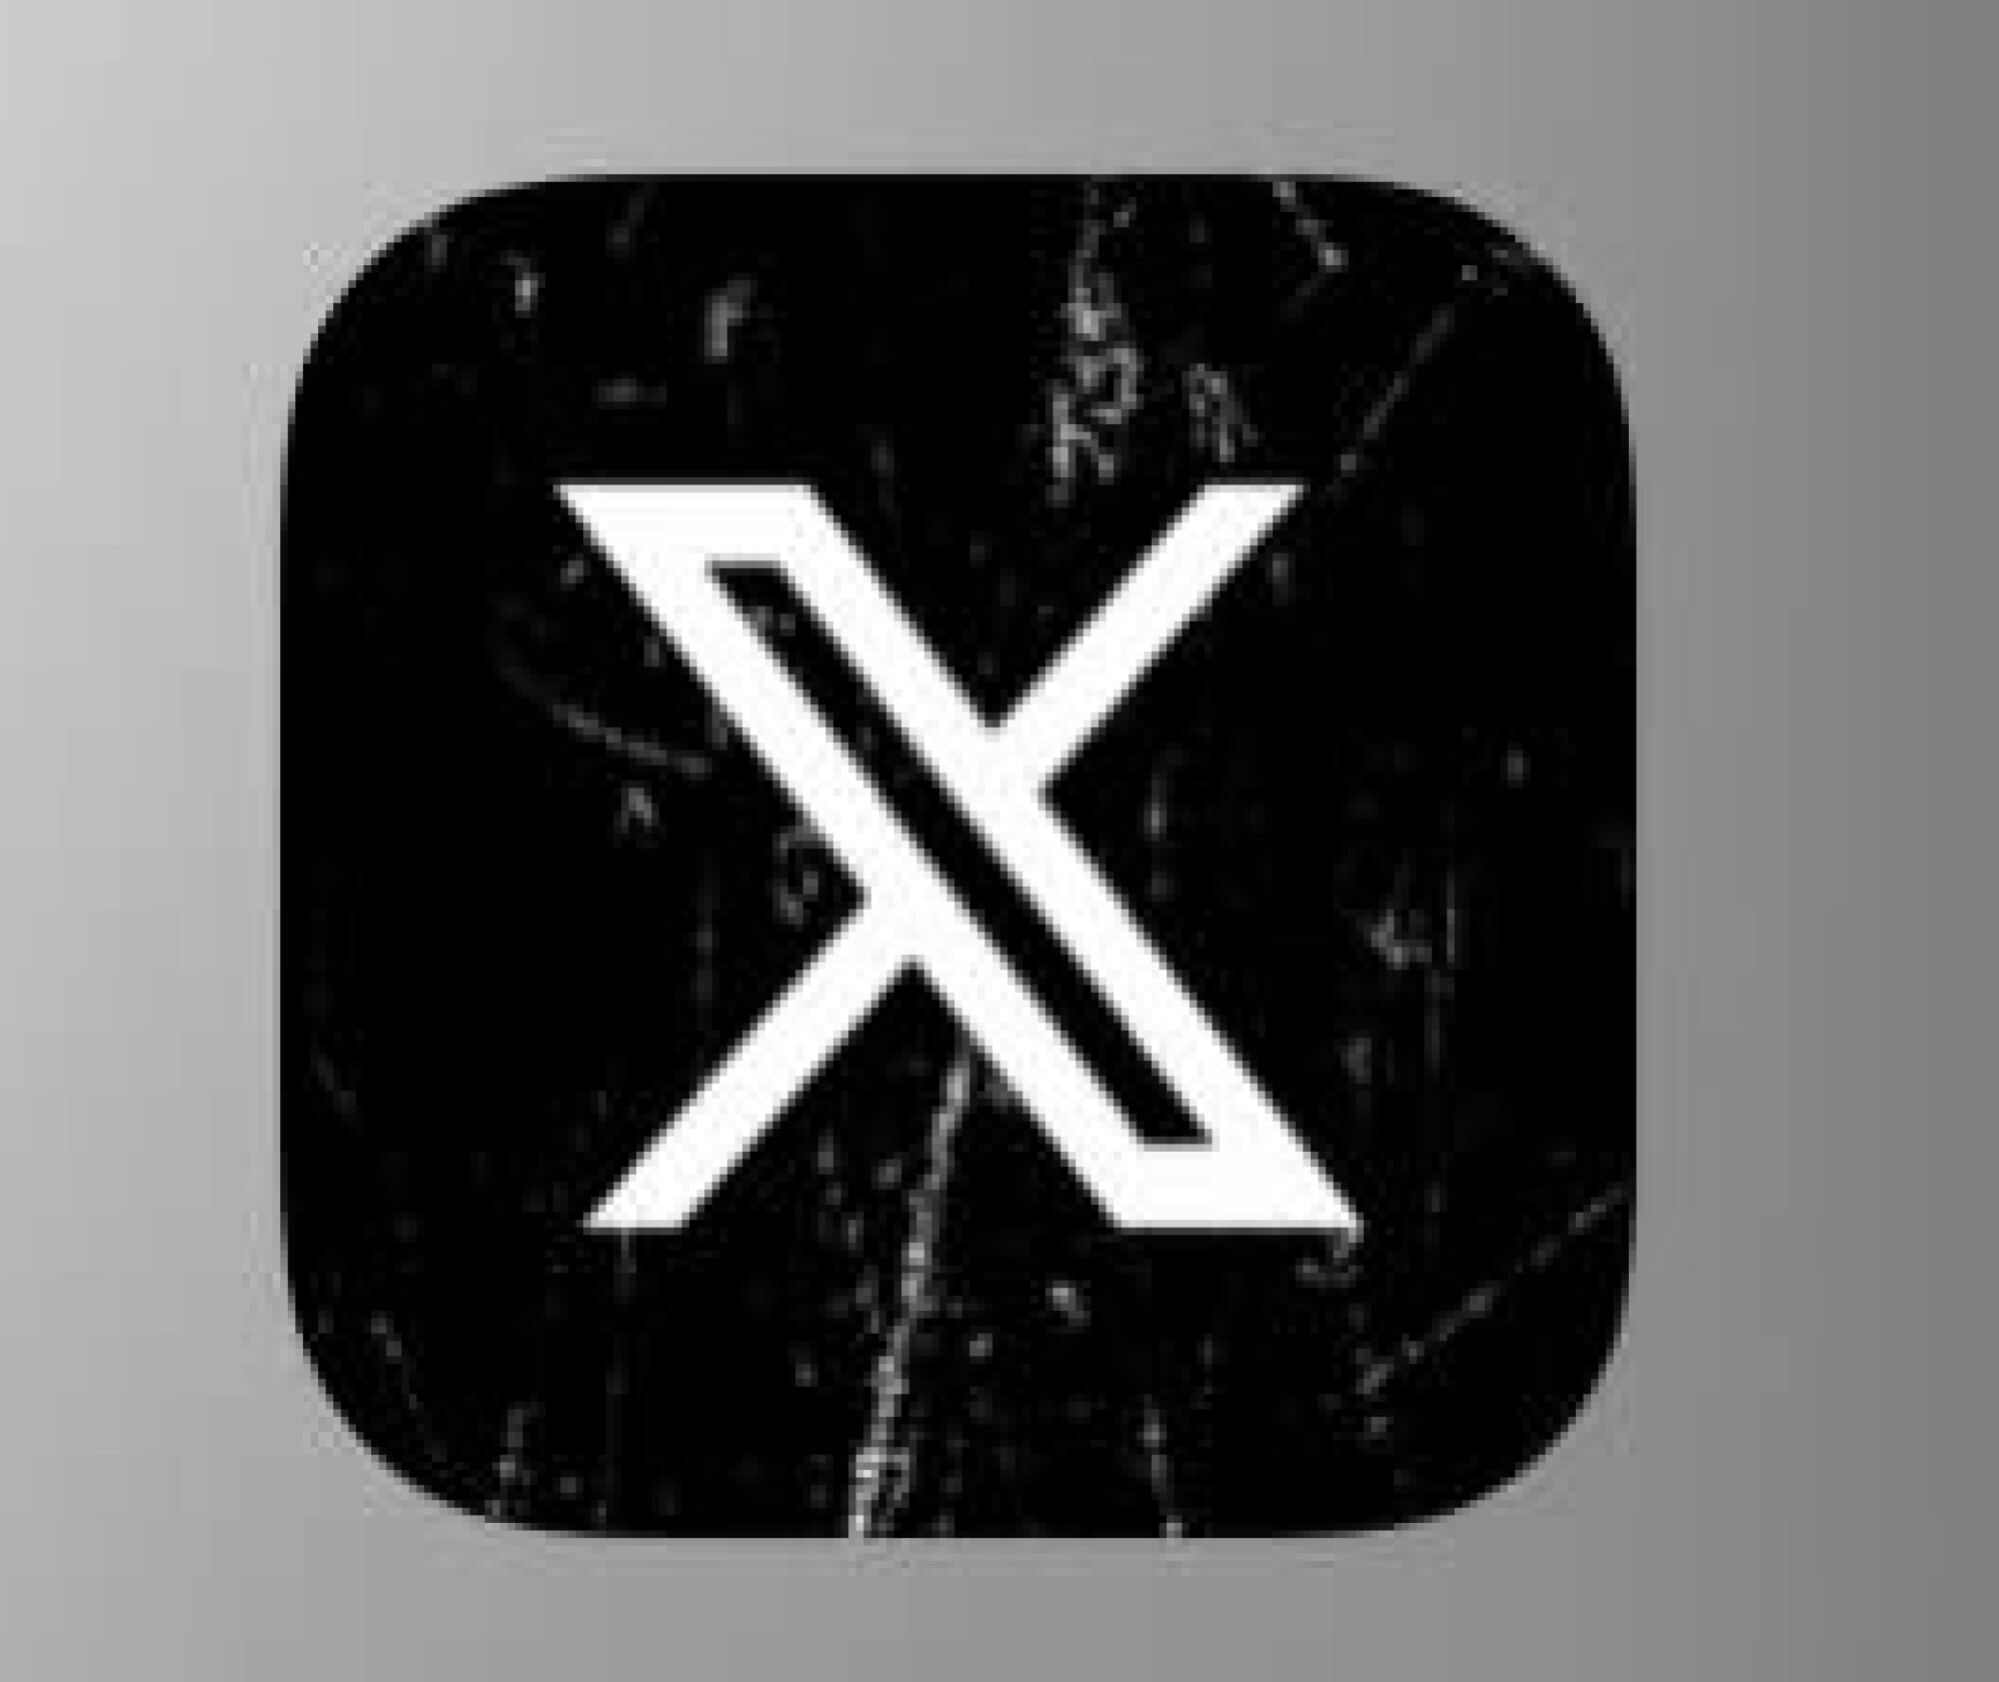 x logo on screen of phone